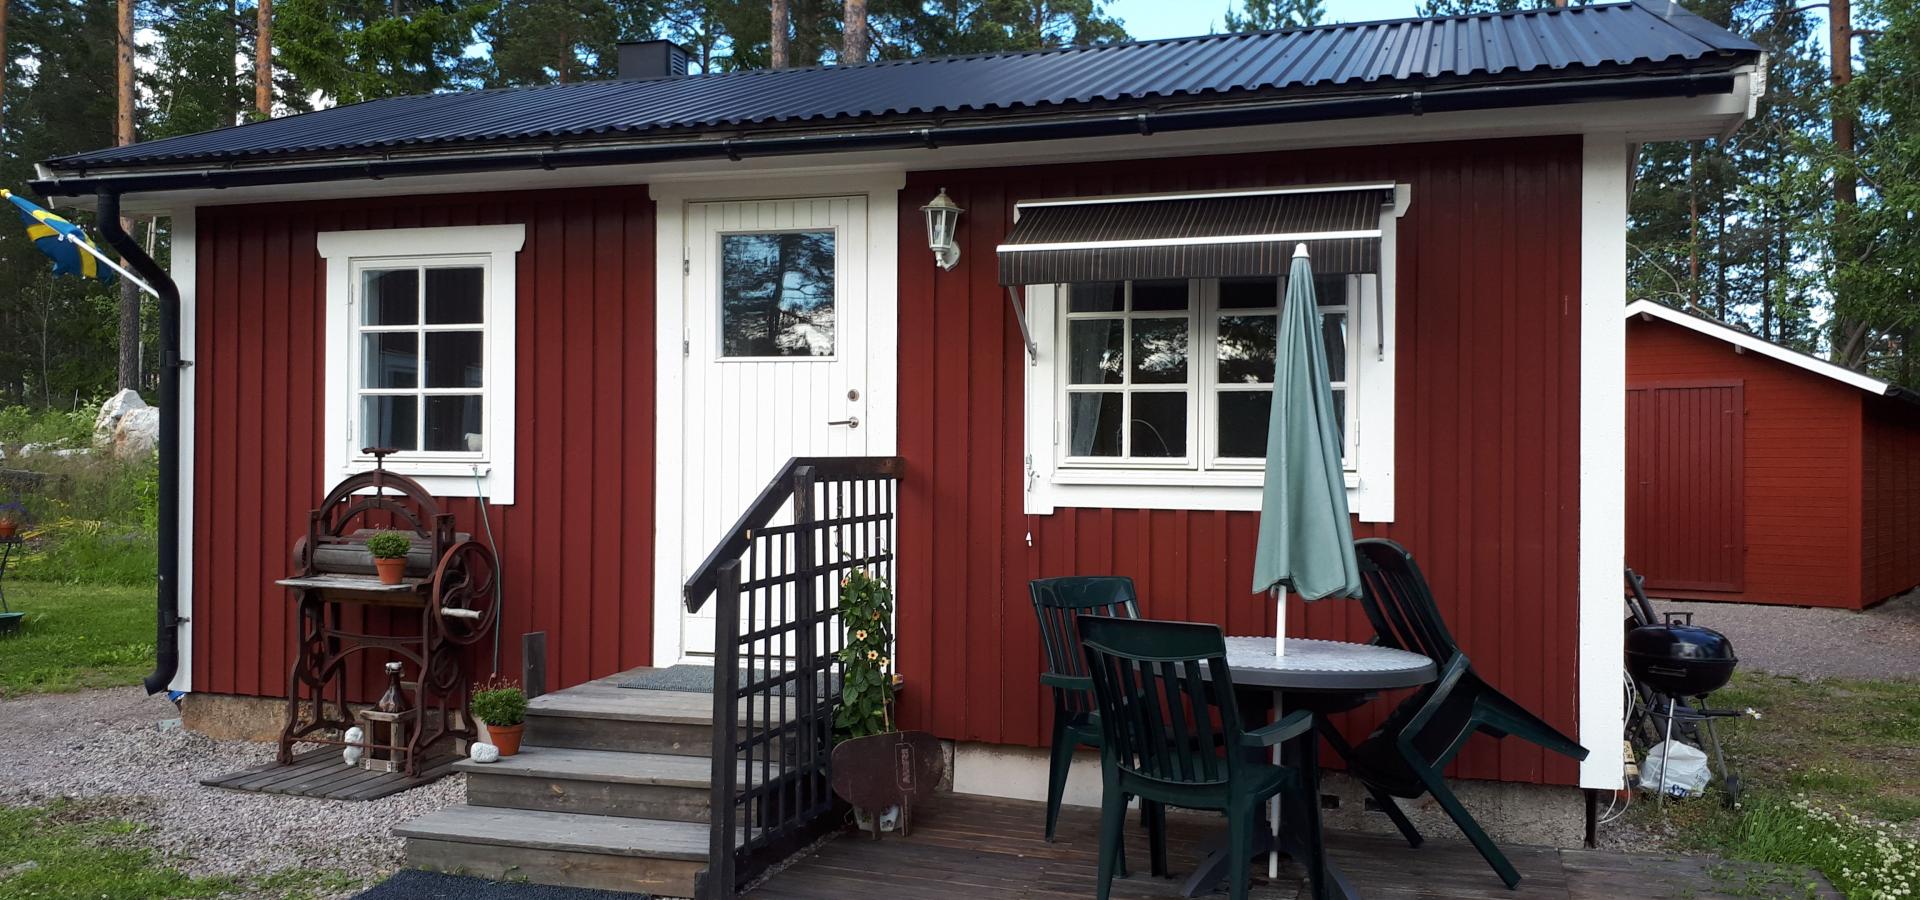 Stuga Gävle, Engesvik, 11 km från Gävle 